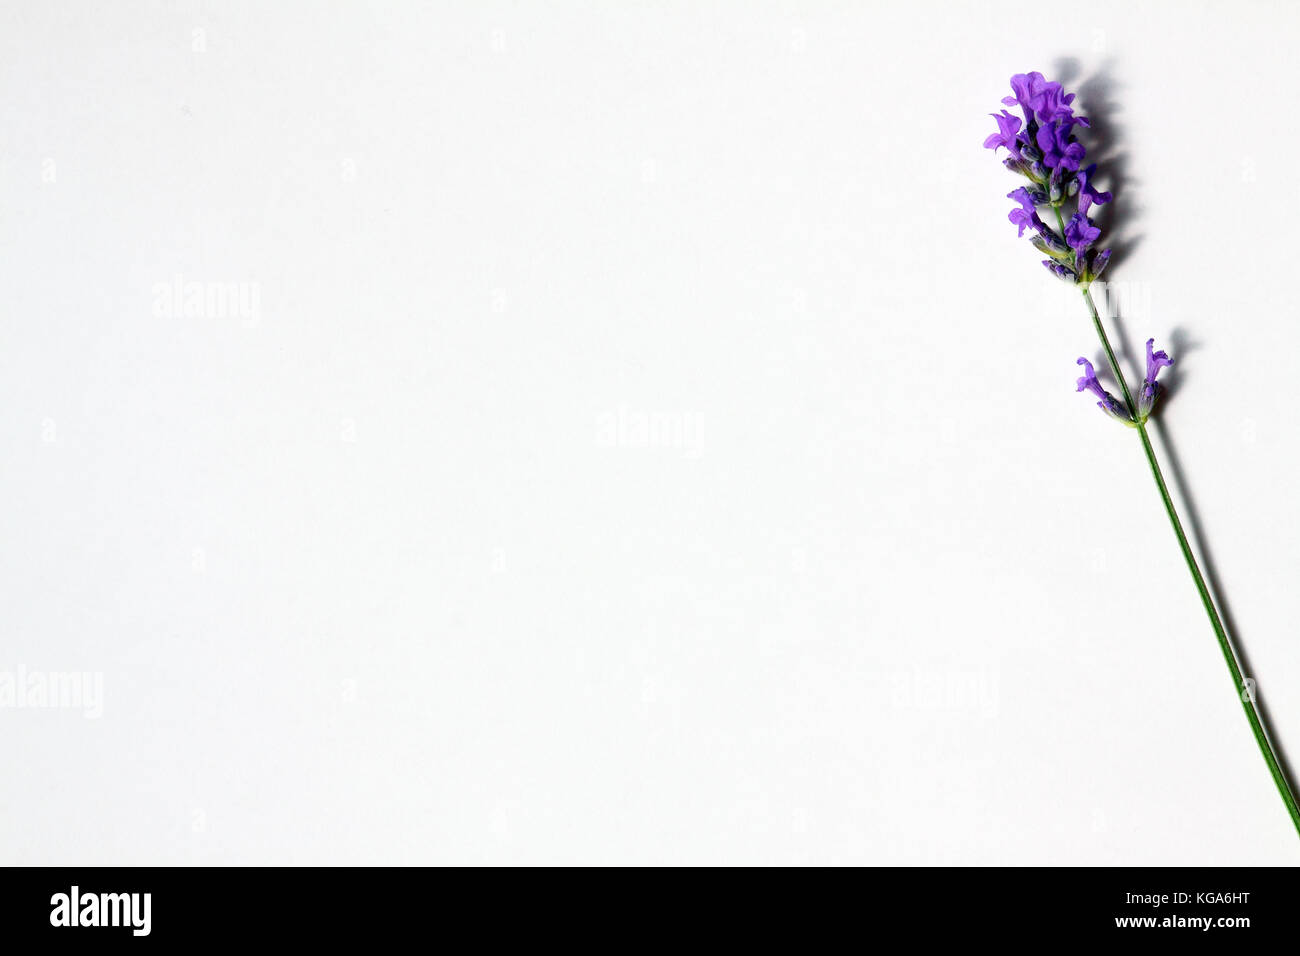 Lavender flower on a plain white background Stock Photo